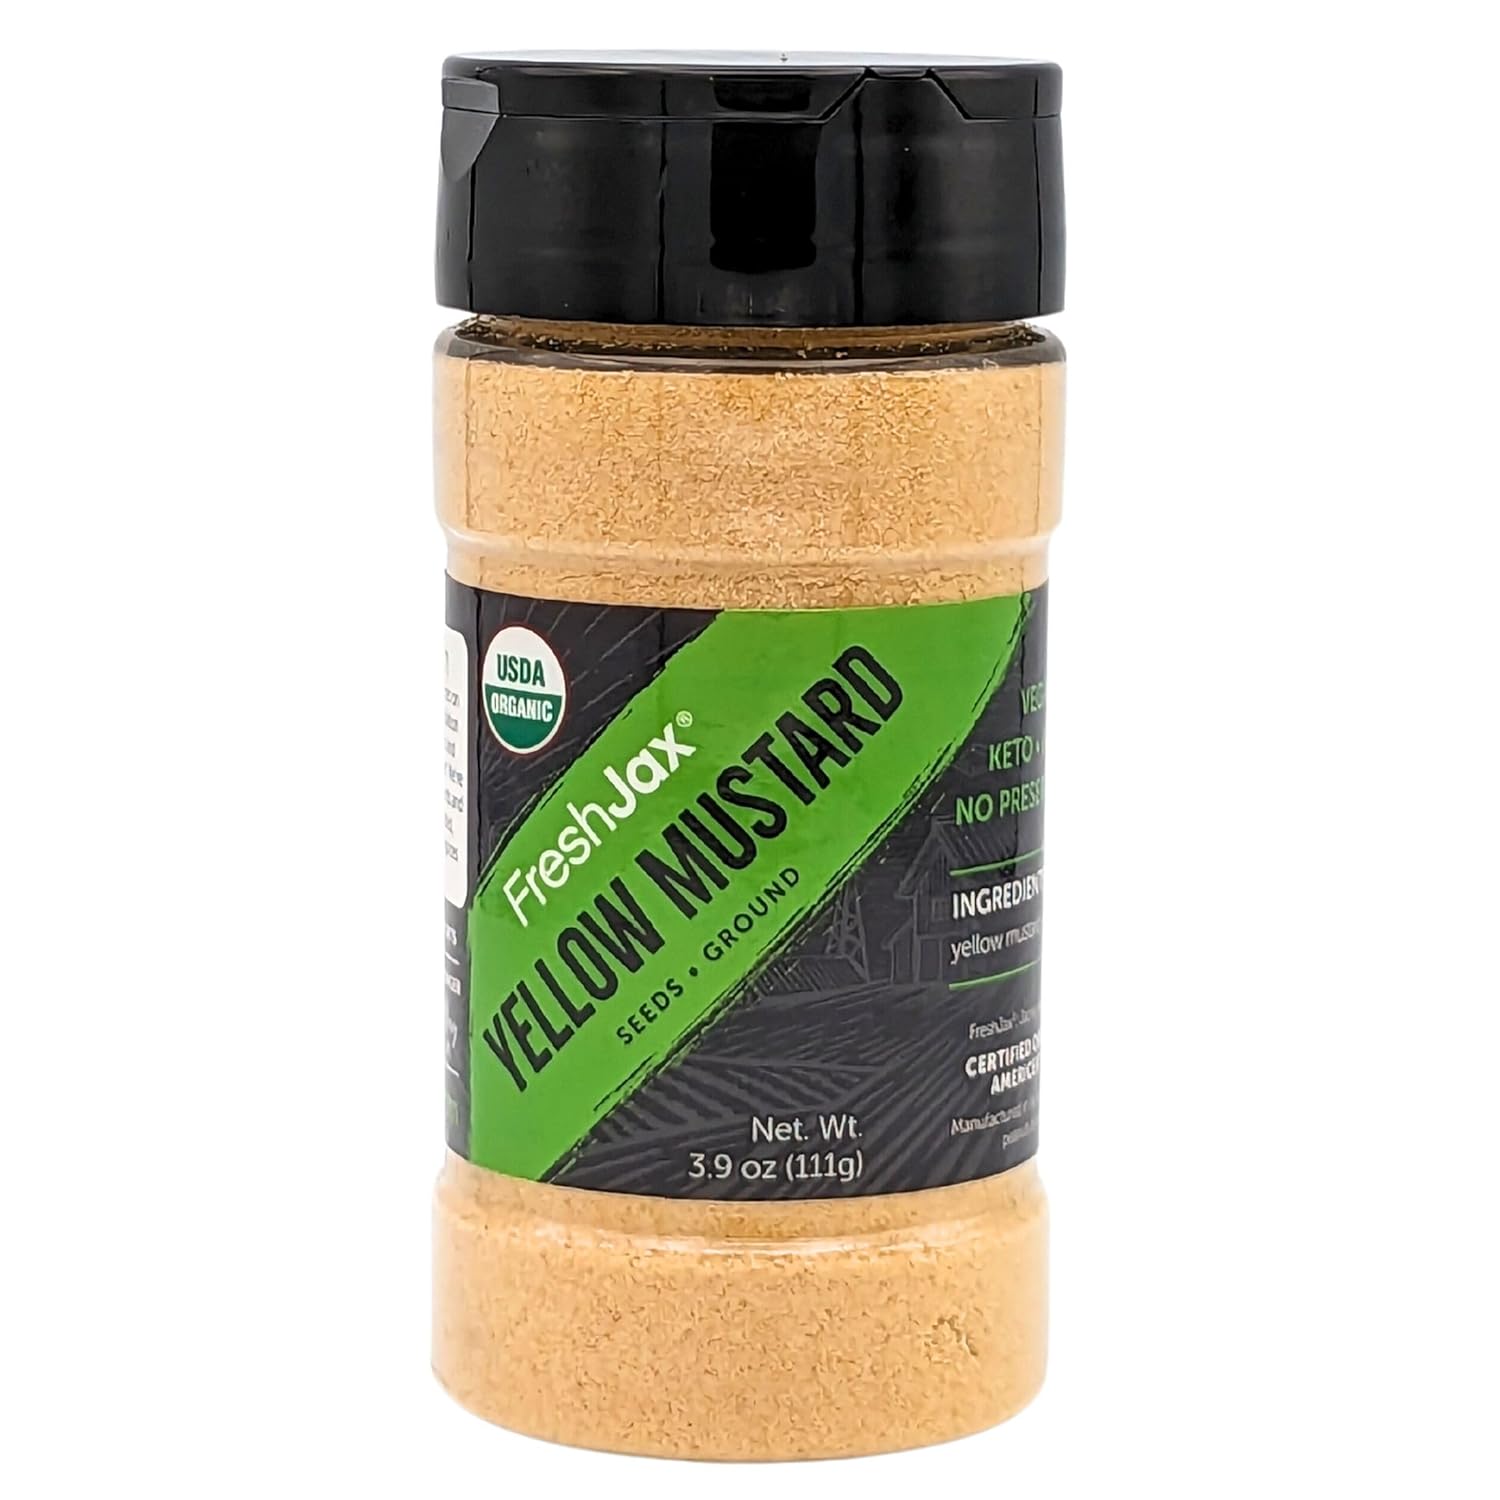 FreshJax Organic Ground Yellow Mustard Seeds Powder (3.9 oz Bottle) Non GMO, Gluten Free, Keto, Paleo, No Preservatives Yellow Mustard Seed | Handcrafted in Jacksonville, Florida